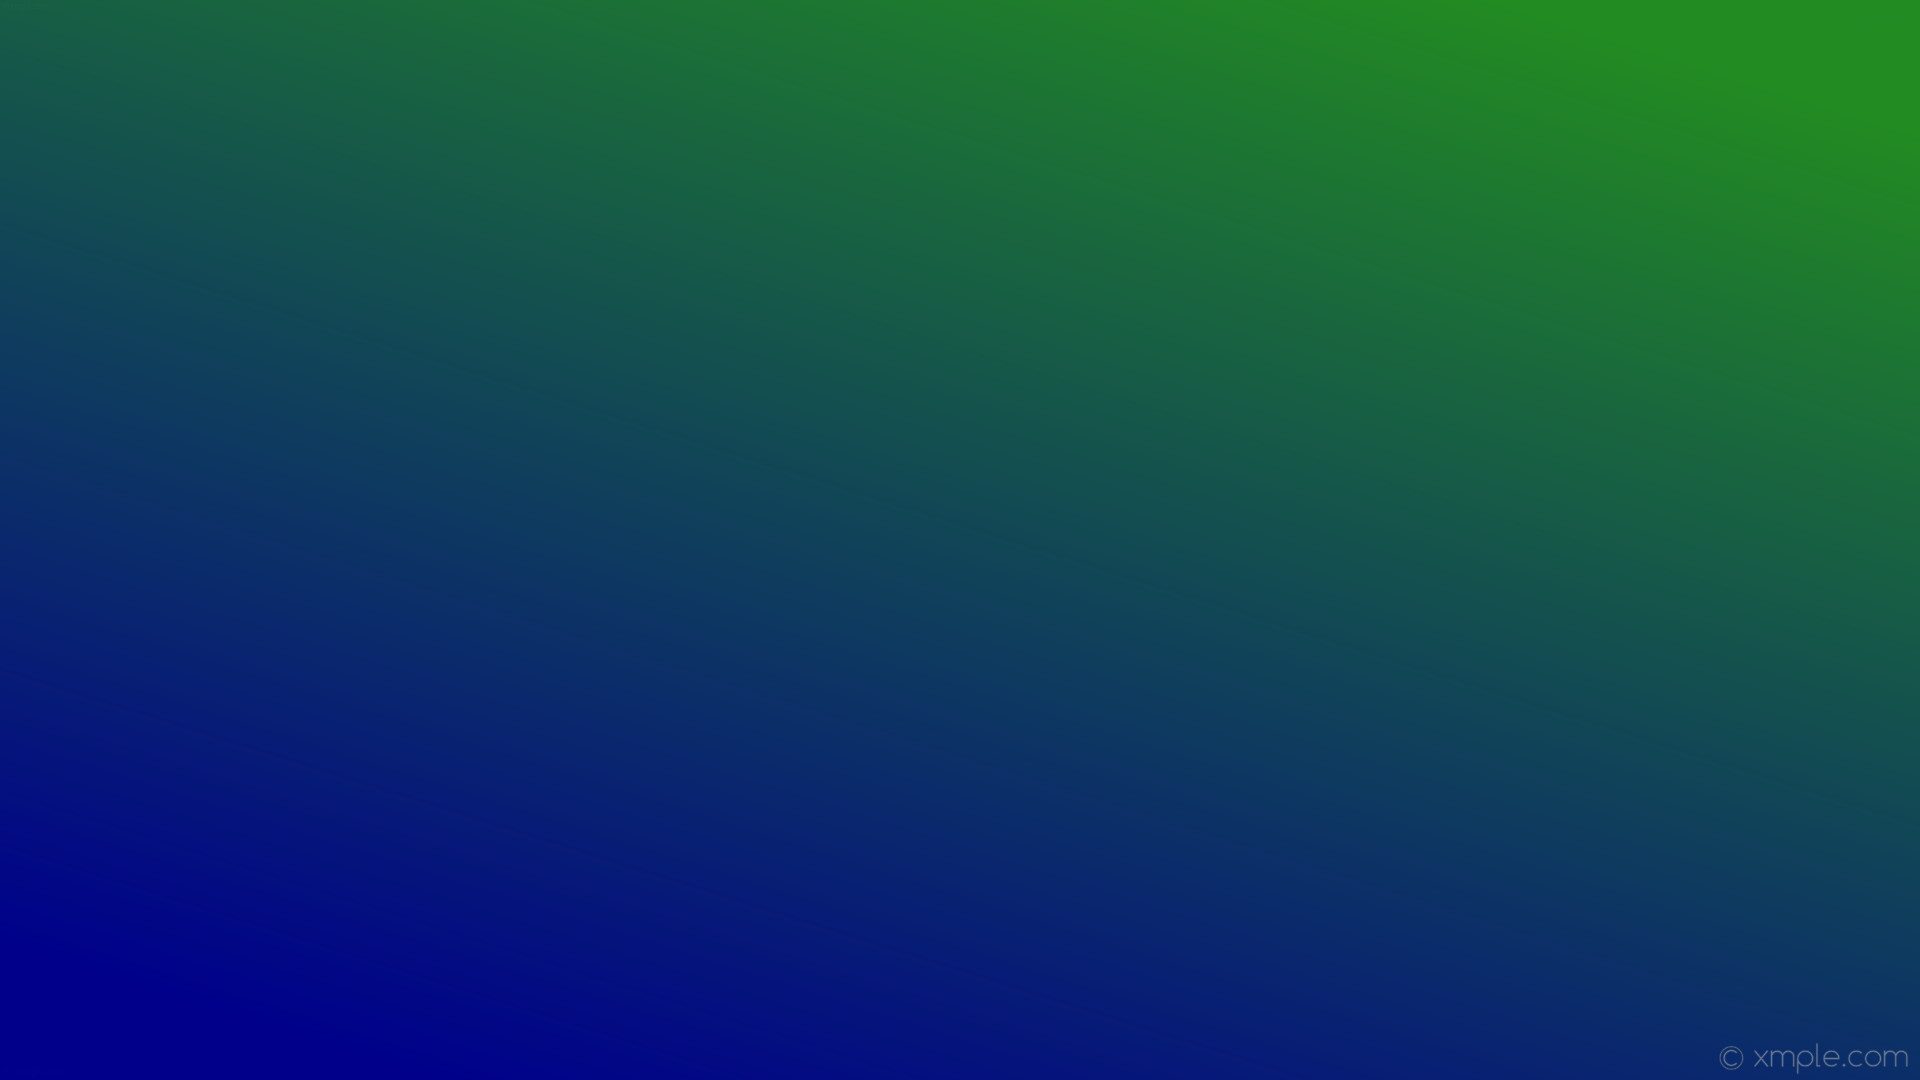 1920x1080 wallpaper blue green gradient linear dark blue forest green #00008b #228b22  225Â°